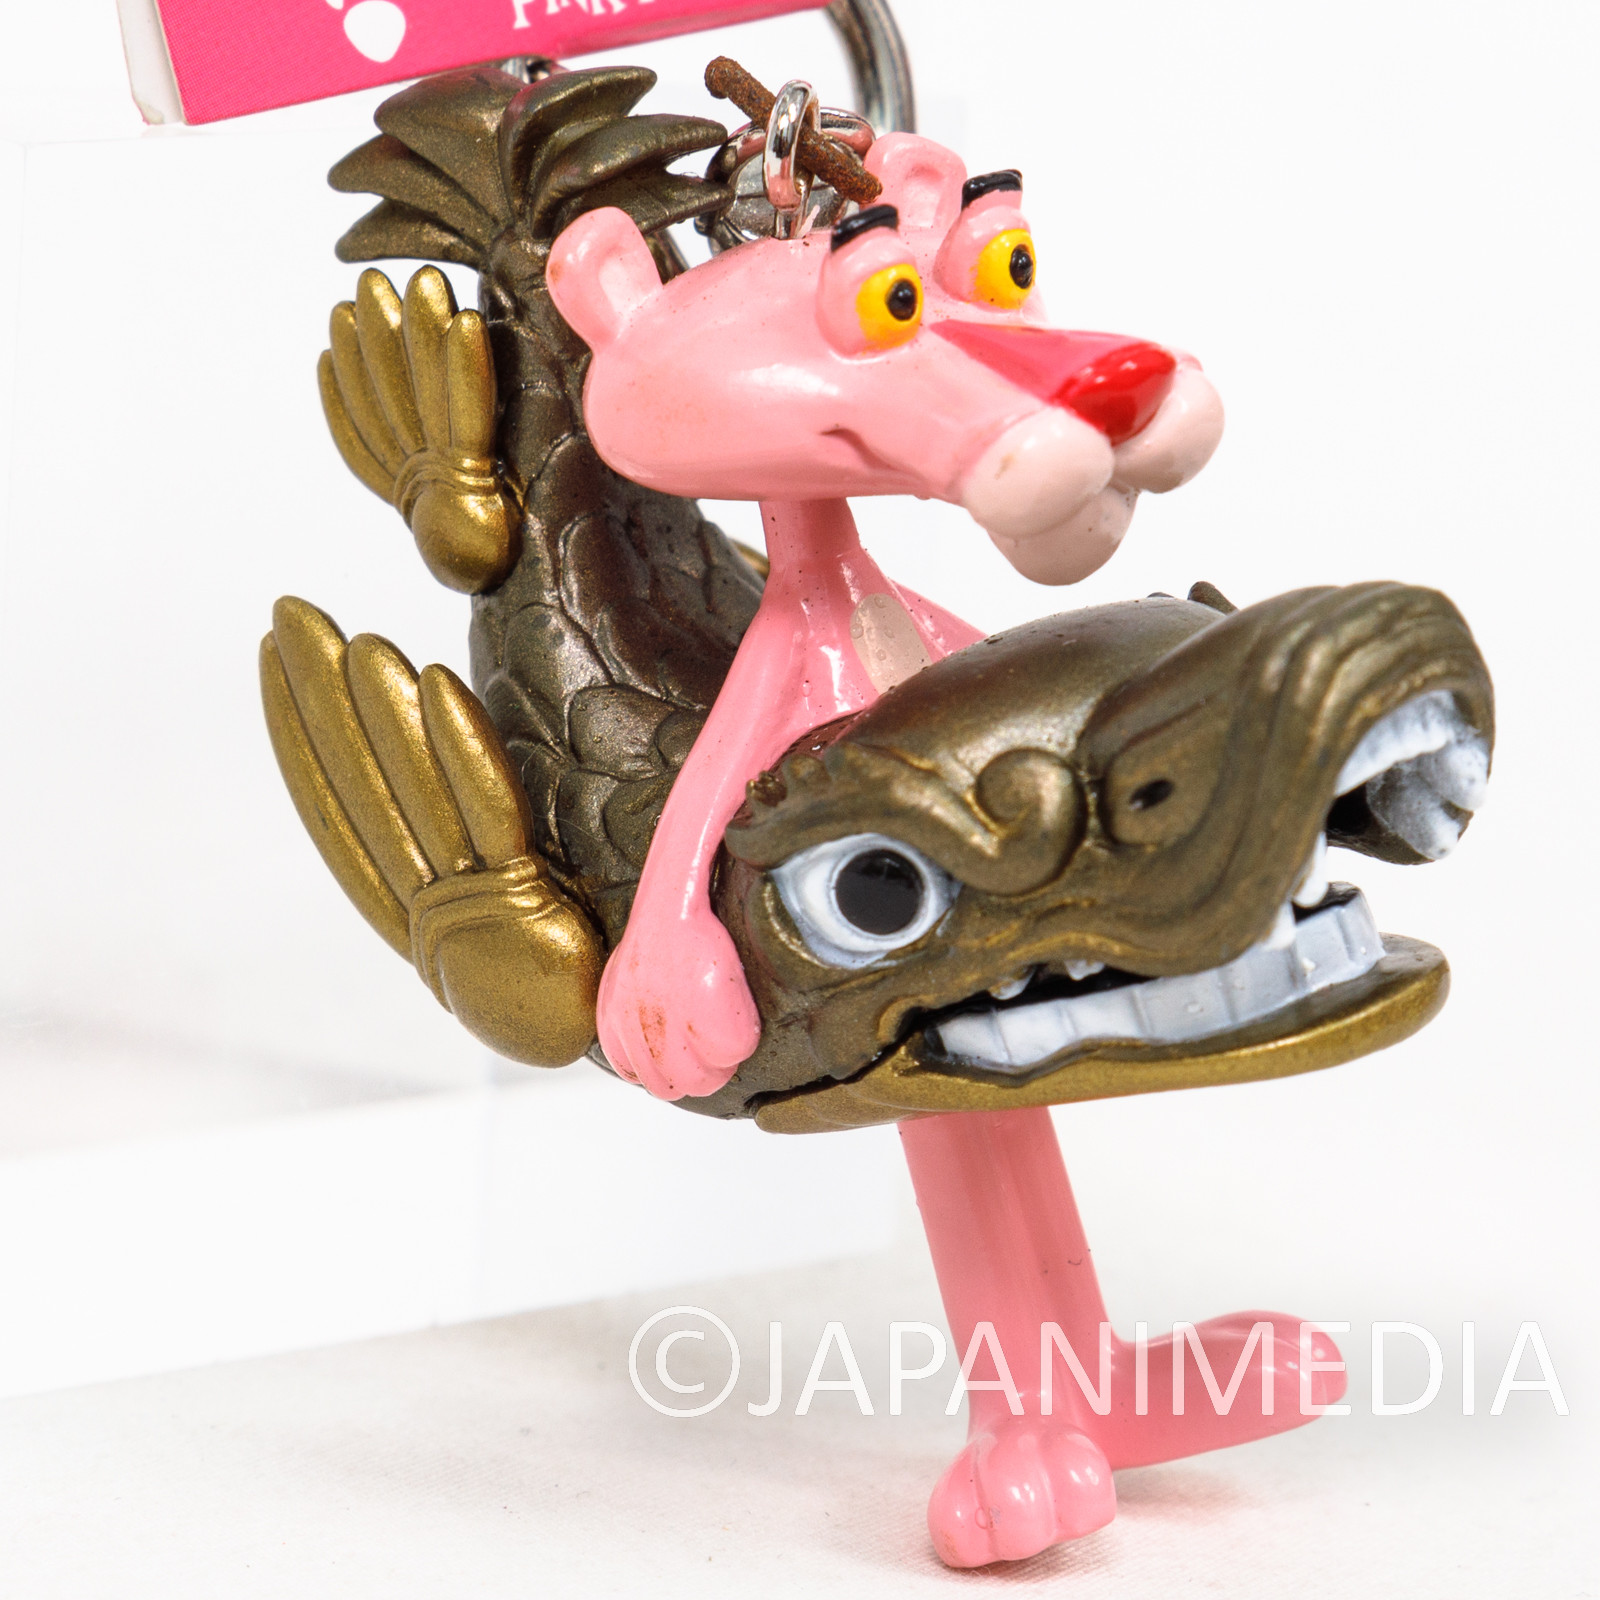 Pink Panther w/Shachihoko Figure Keychain JAPAN NAGOYA